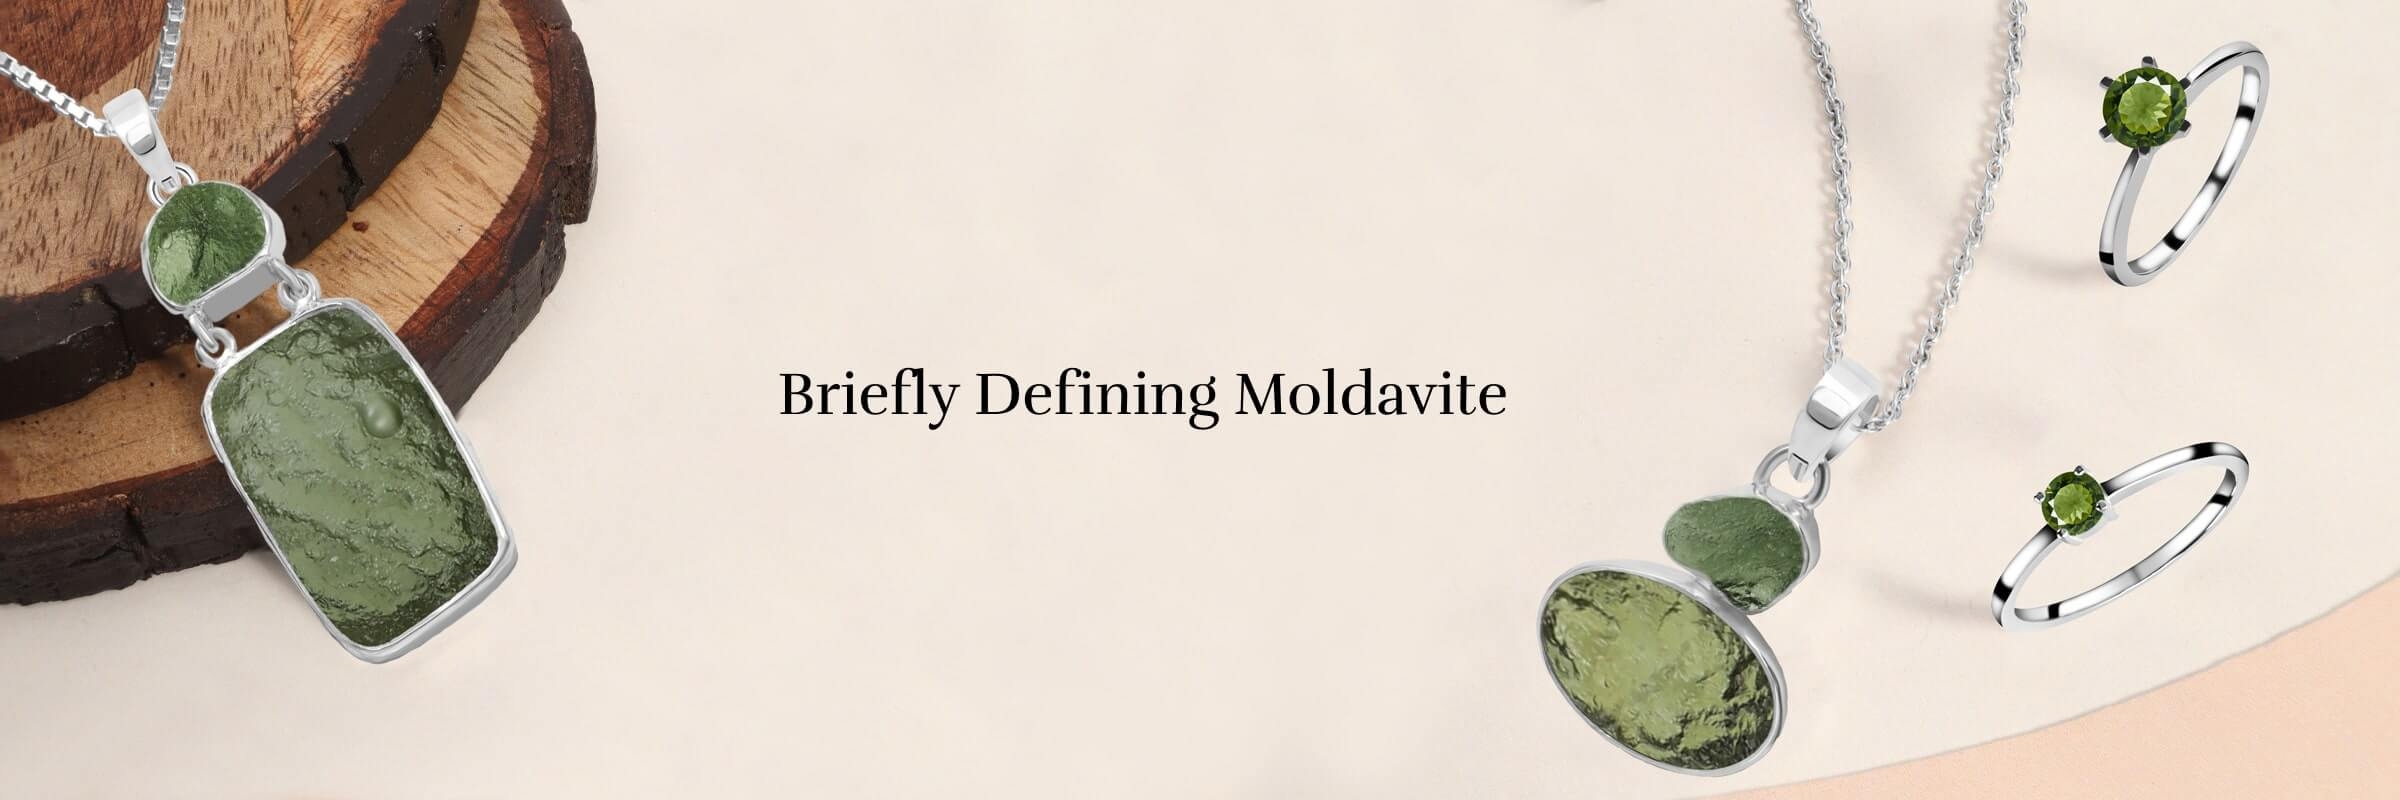 What is Moldavite